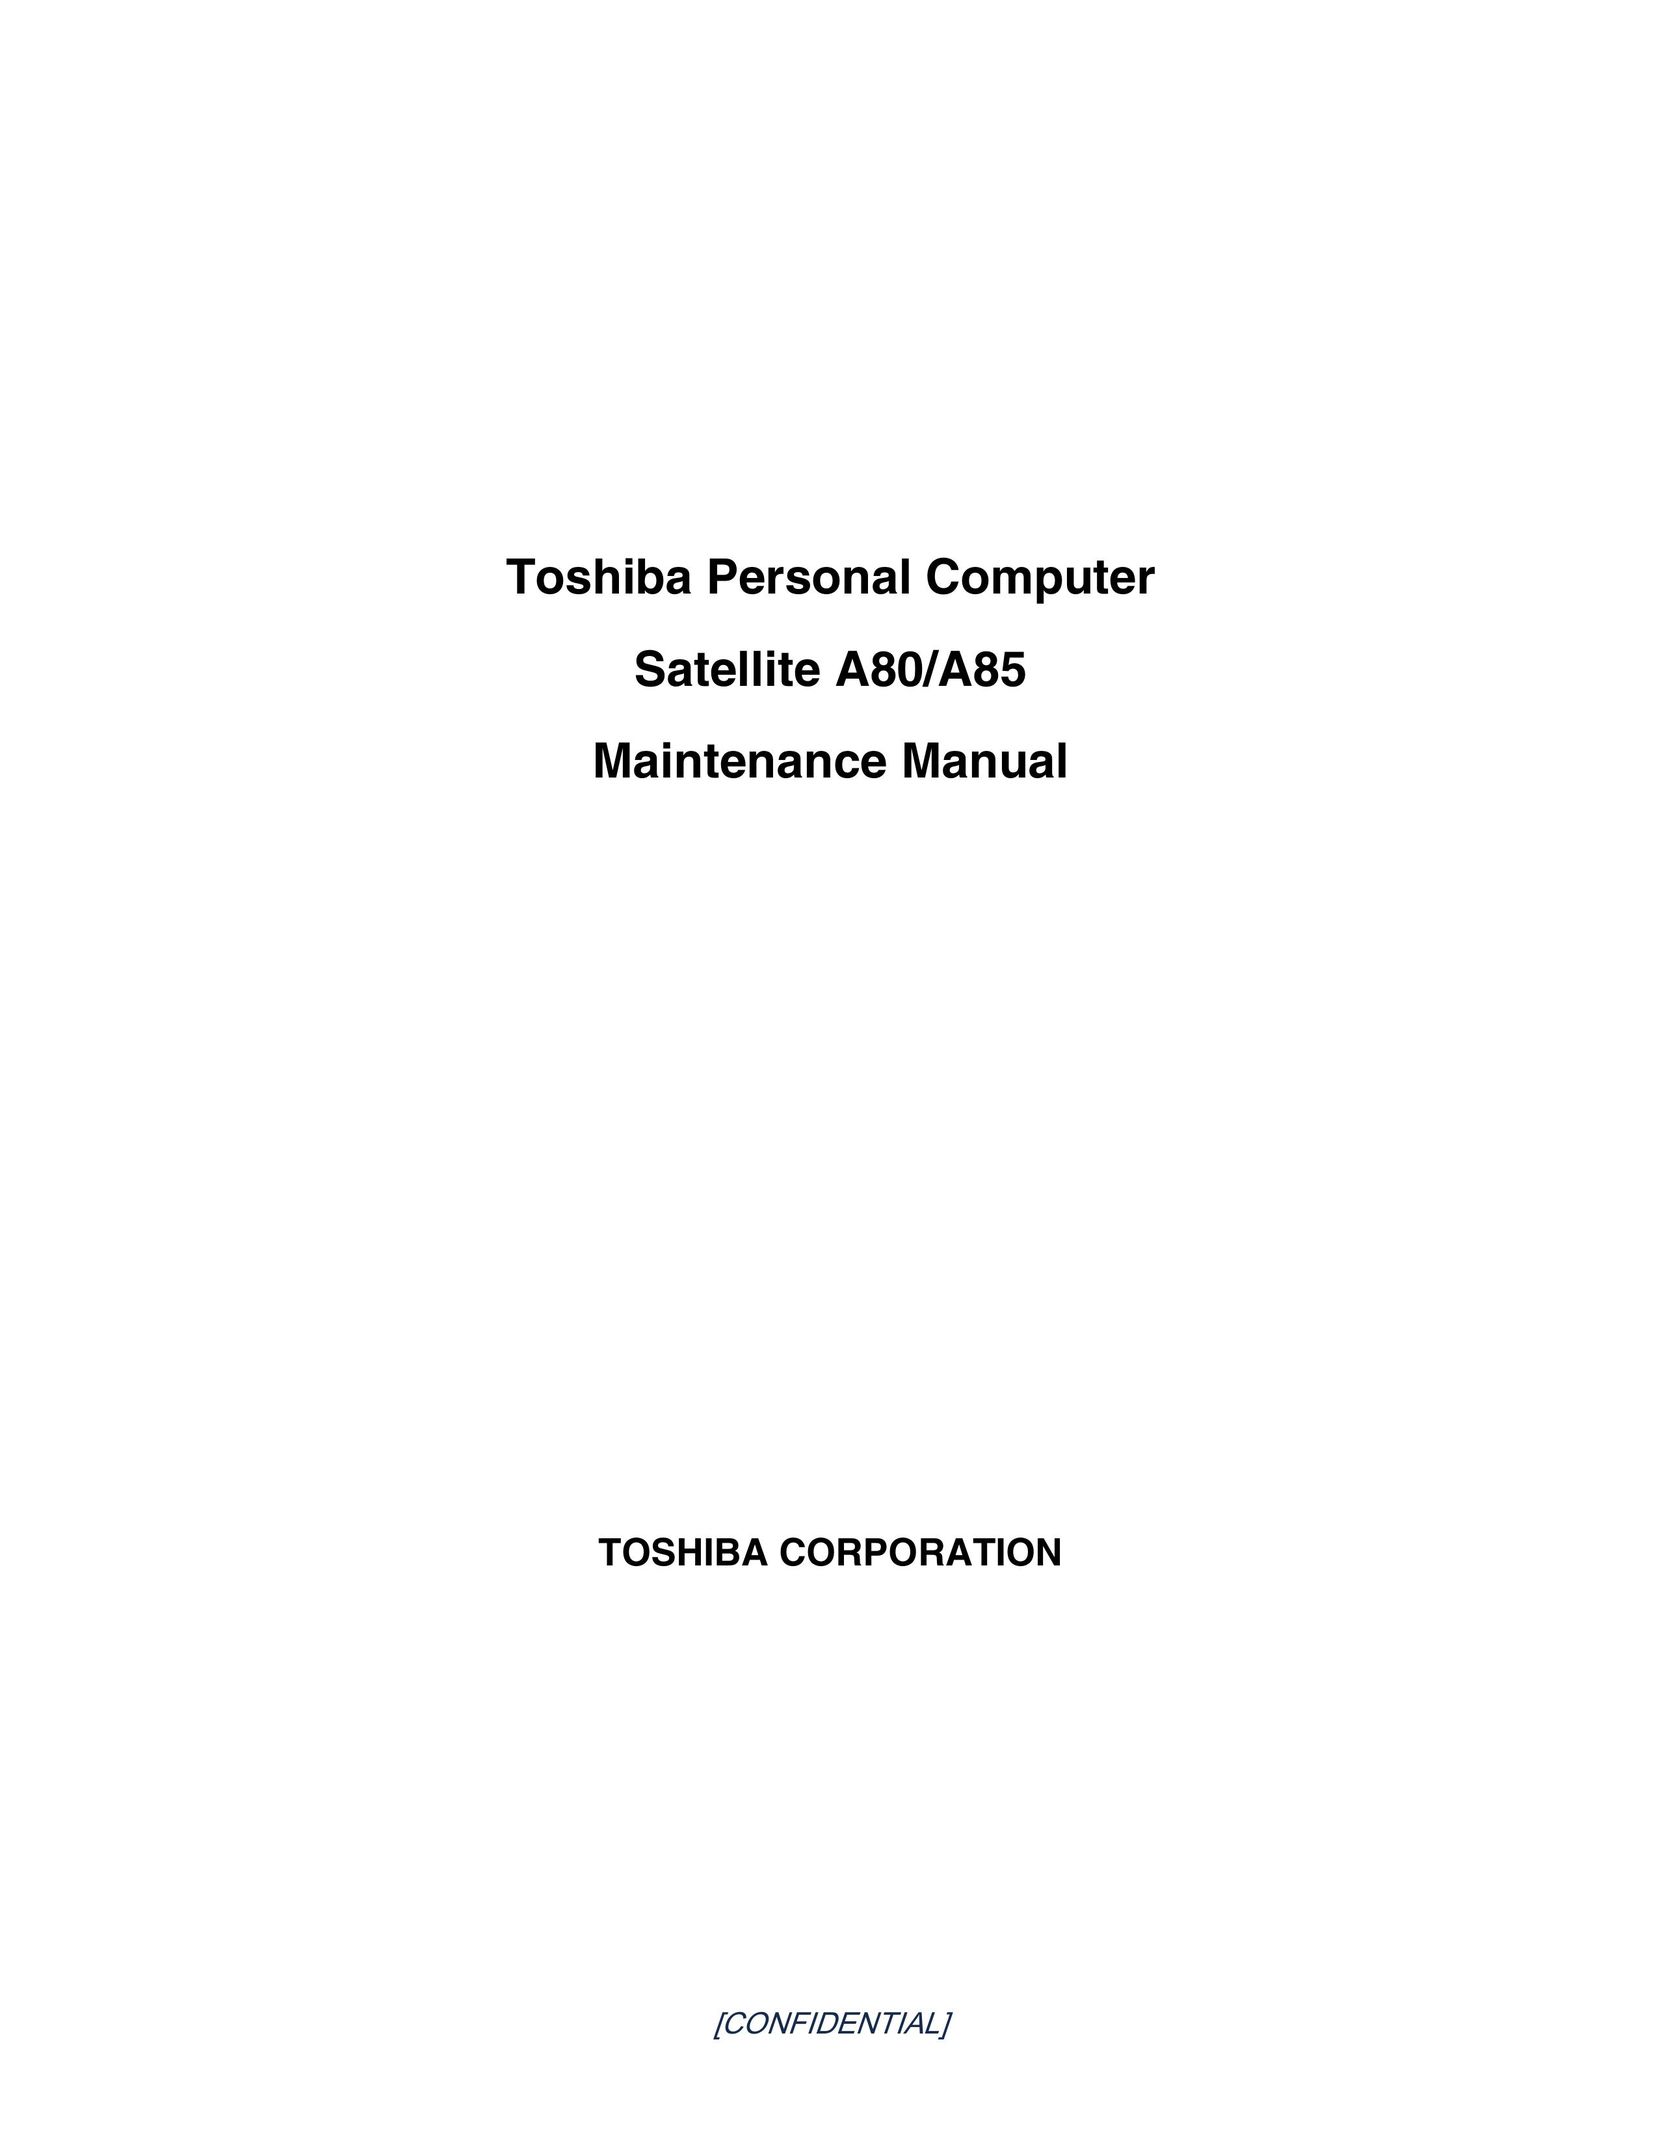 Toshiba A85 Personal Computer User Manual